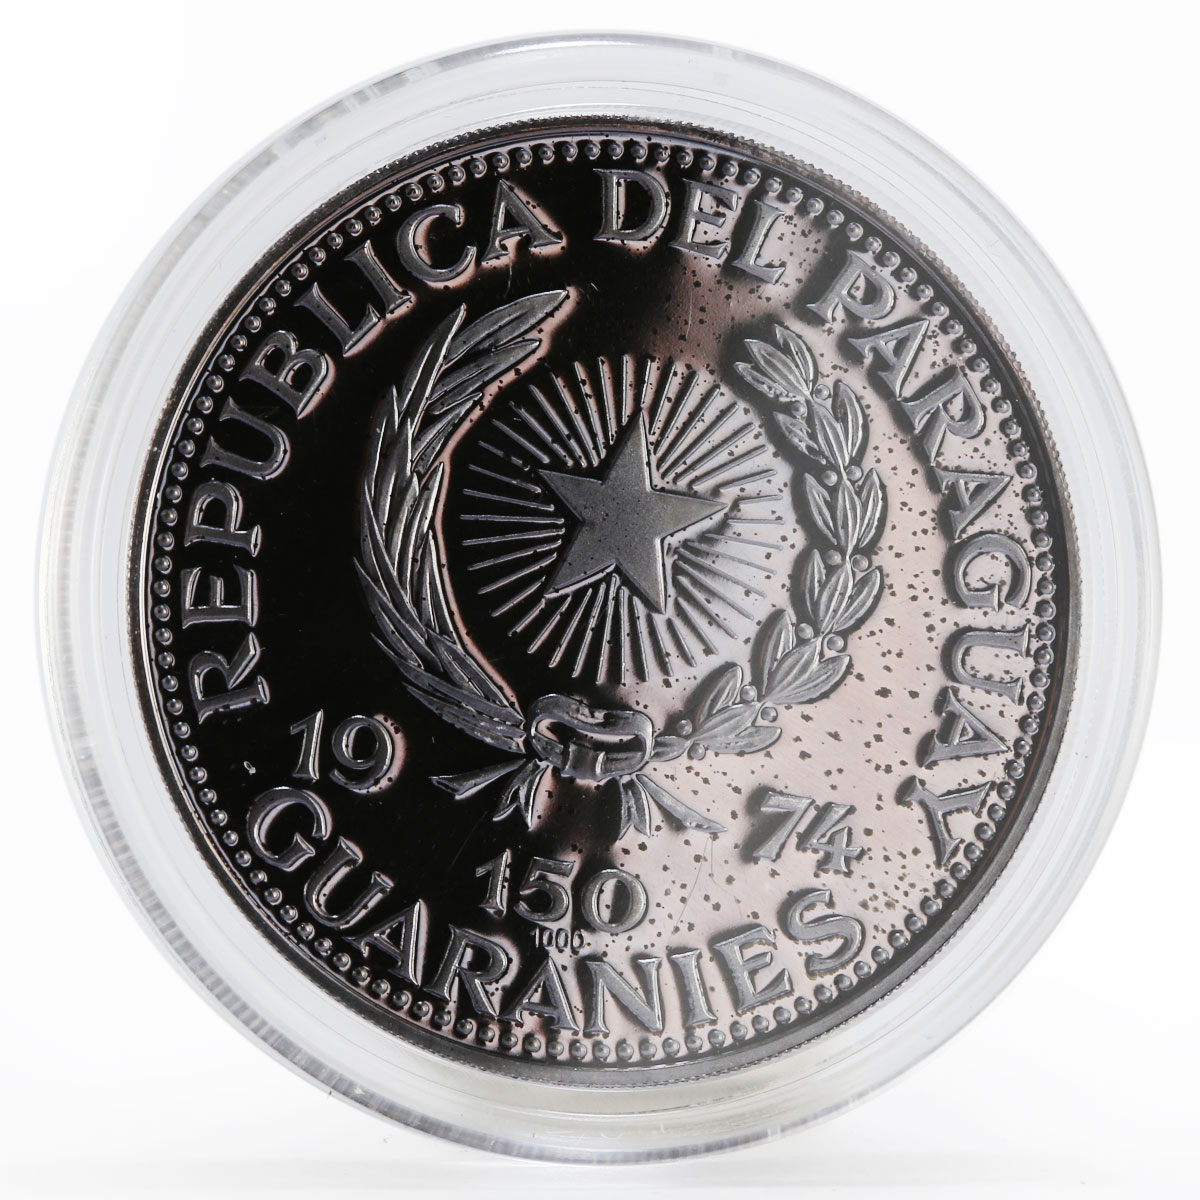 Paraguay 150 guaranies Pope John XXIII proof silver coin 1974